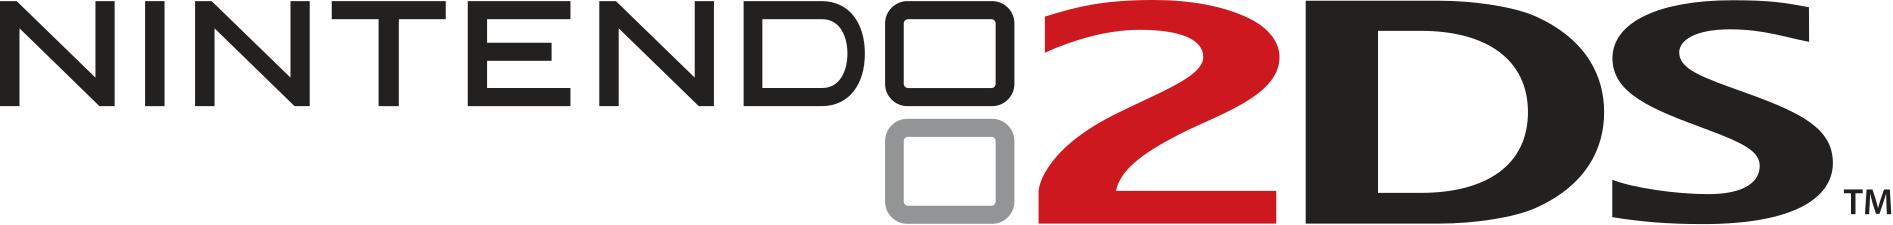 Nintendo 2DS logotype.